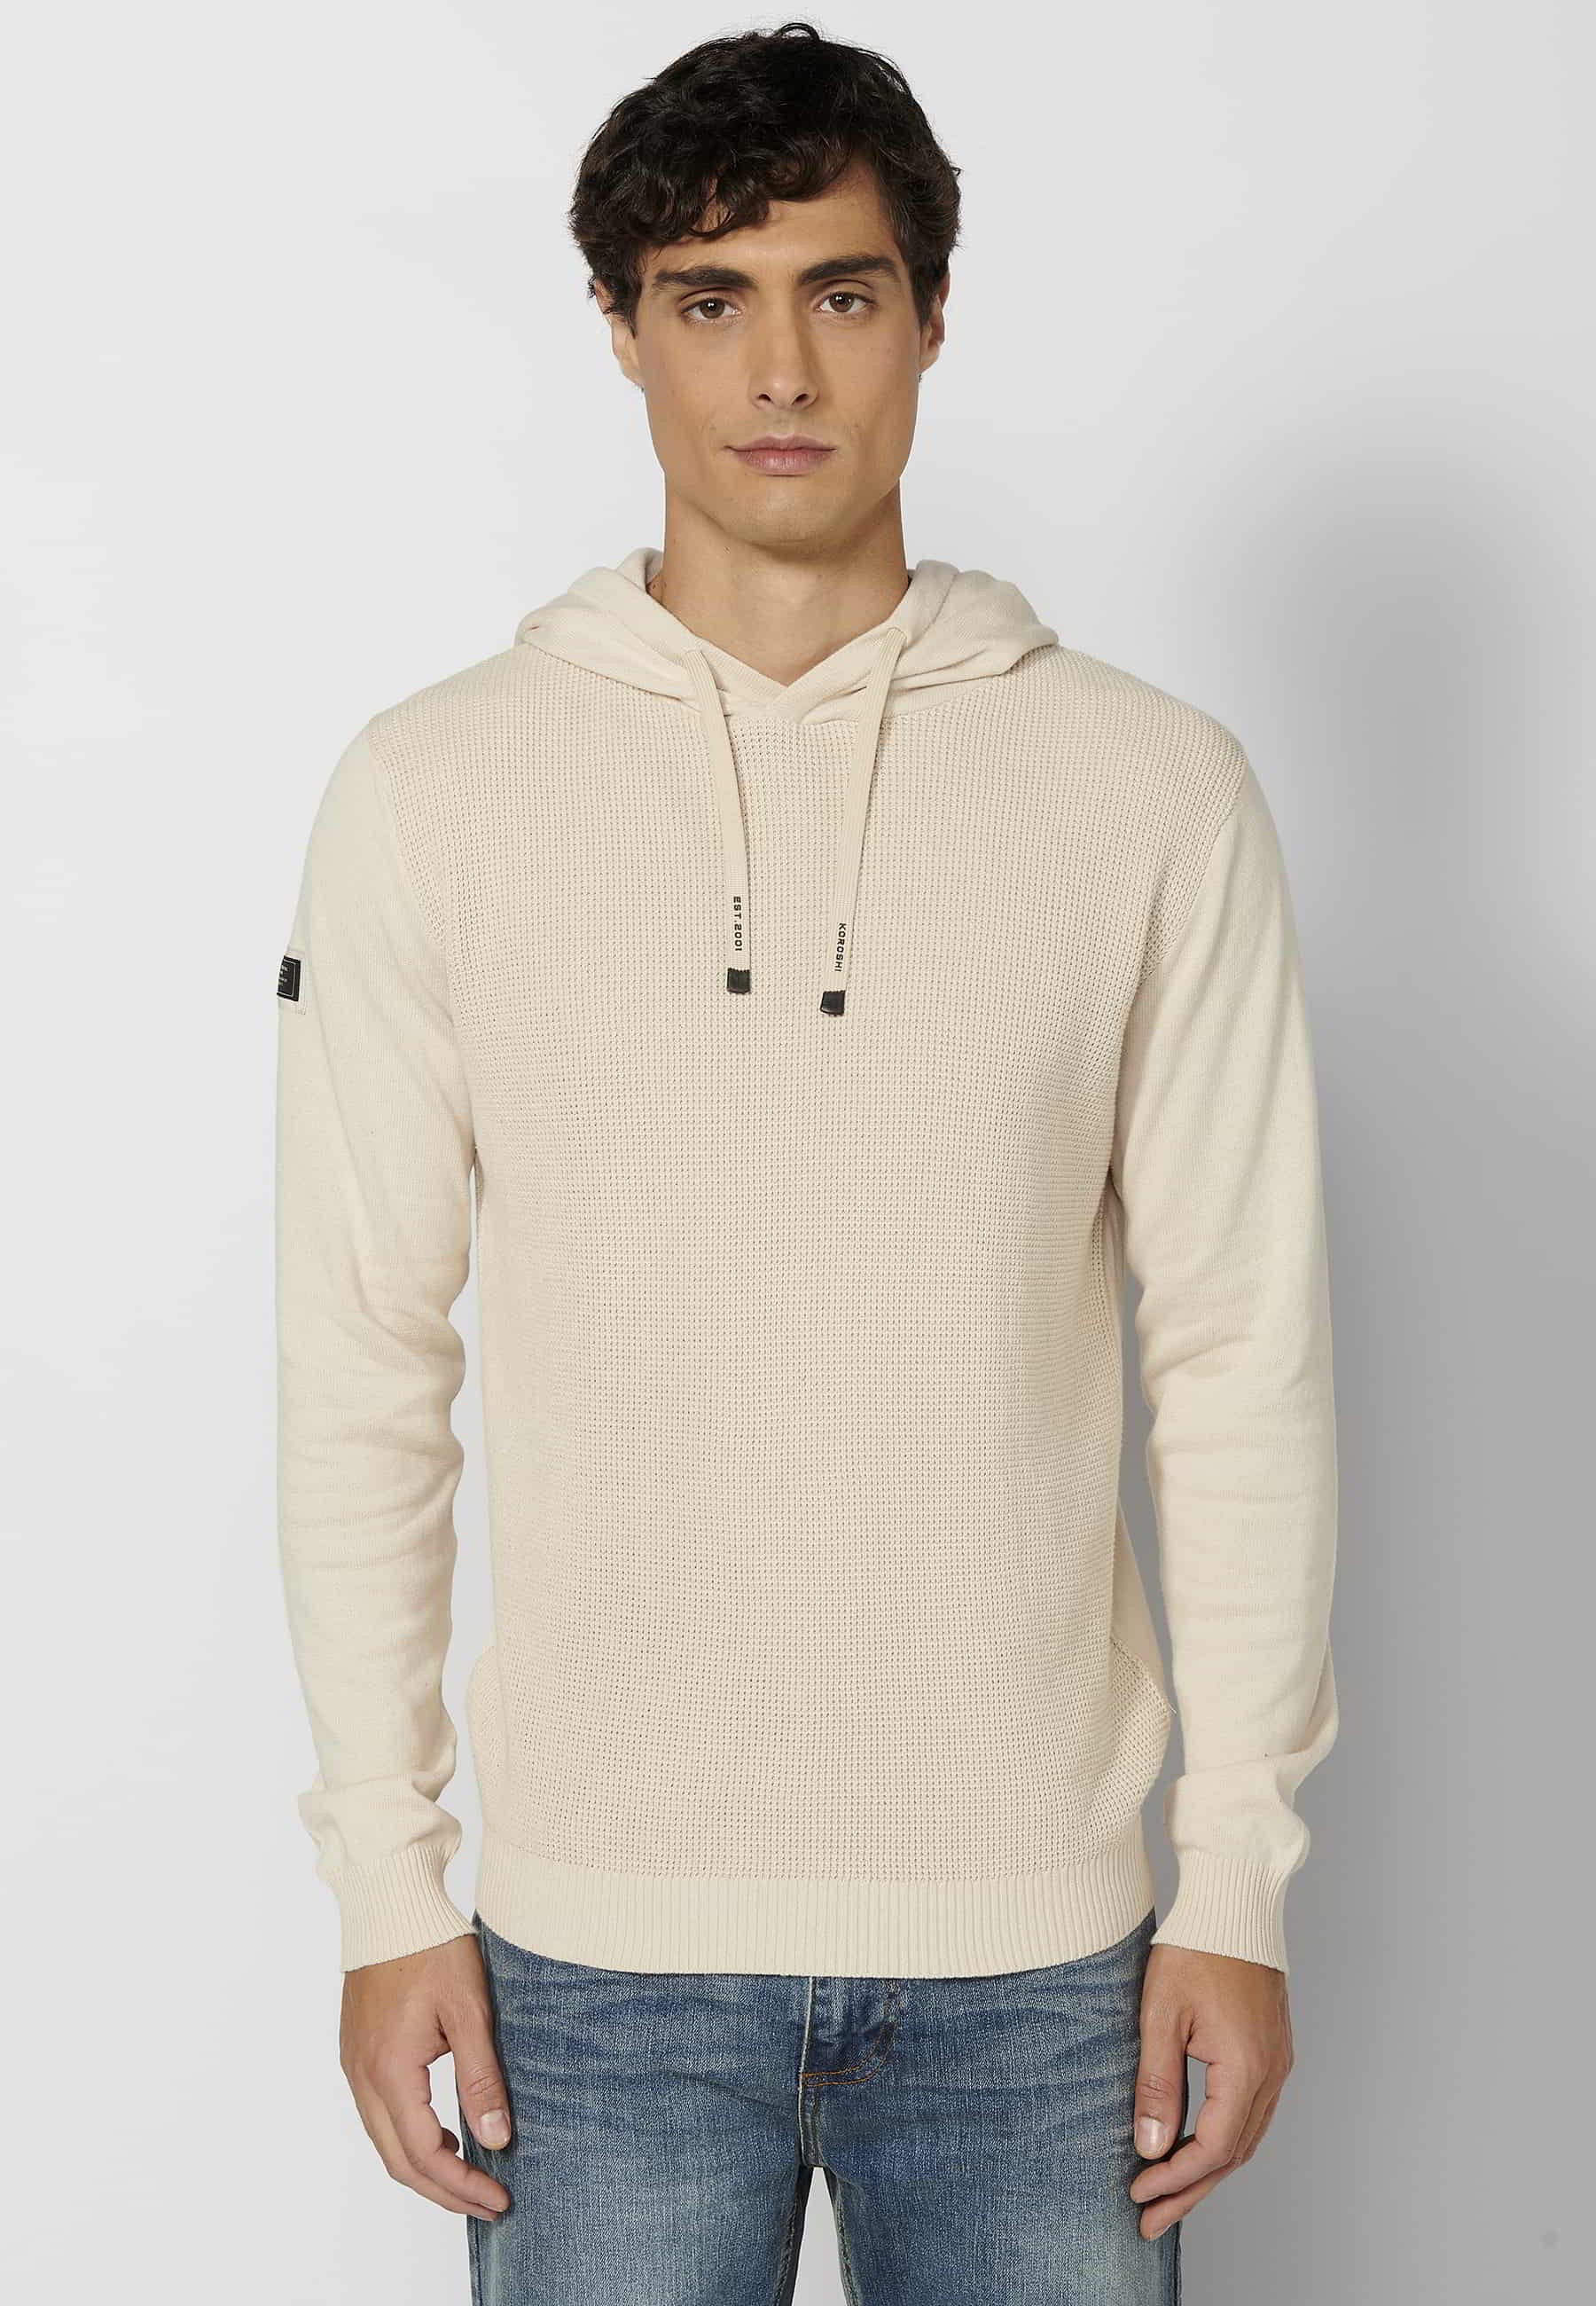 Long-sleeved tricot sweatshirt with adjustable ecru hood for Men 4